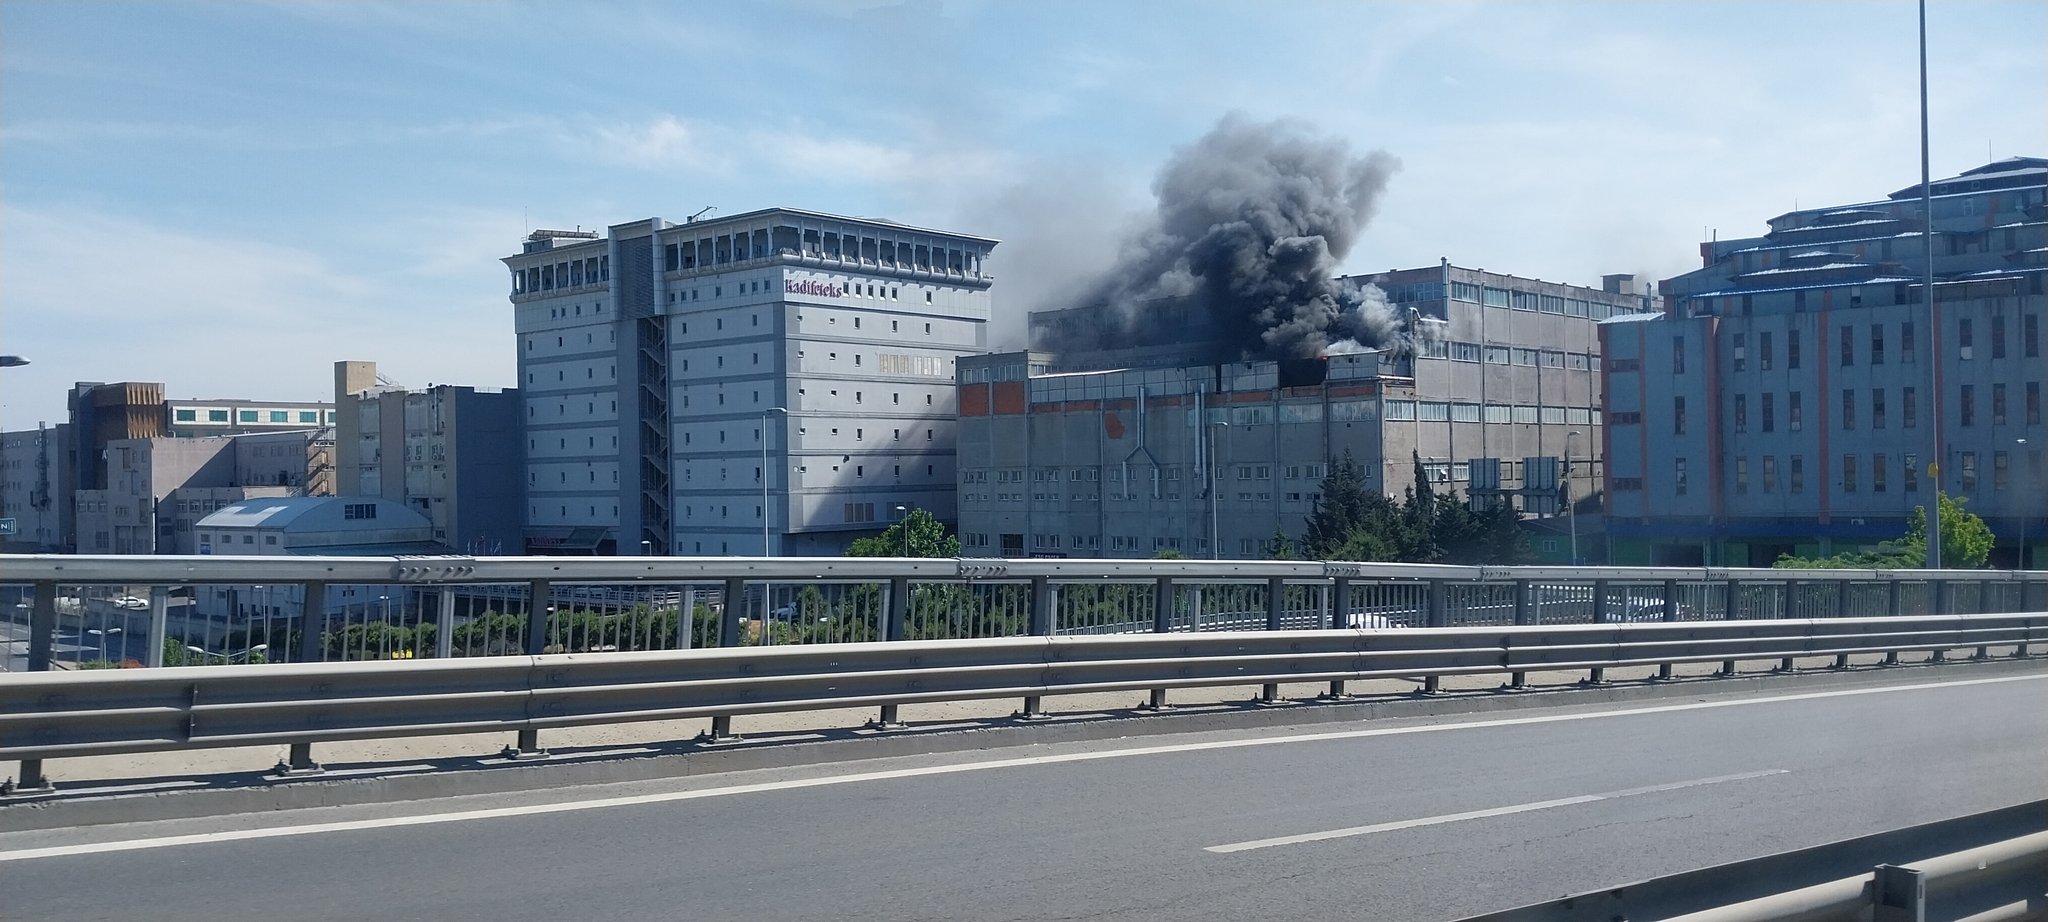 Video: Massive fire breaks out near the Champions League final stadium CaughtOffside